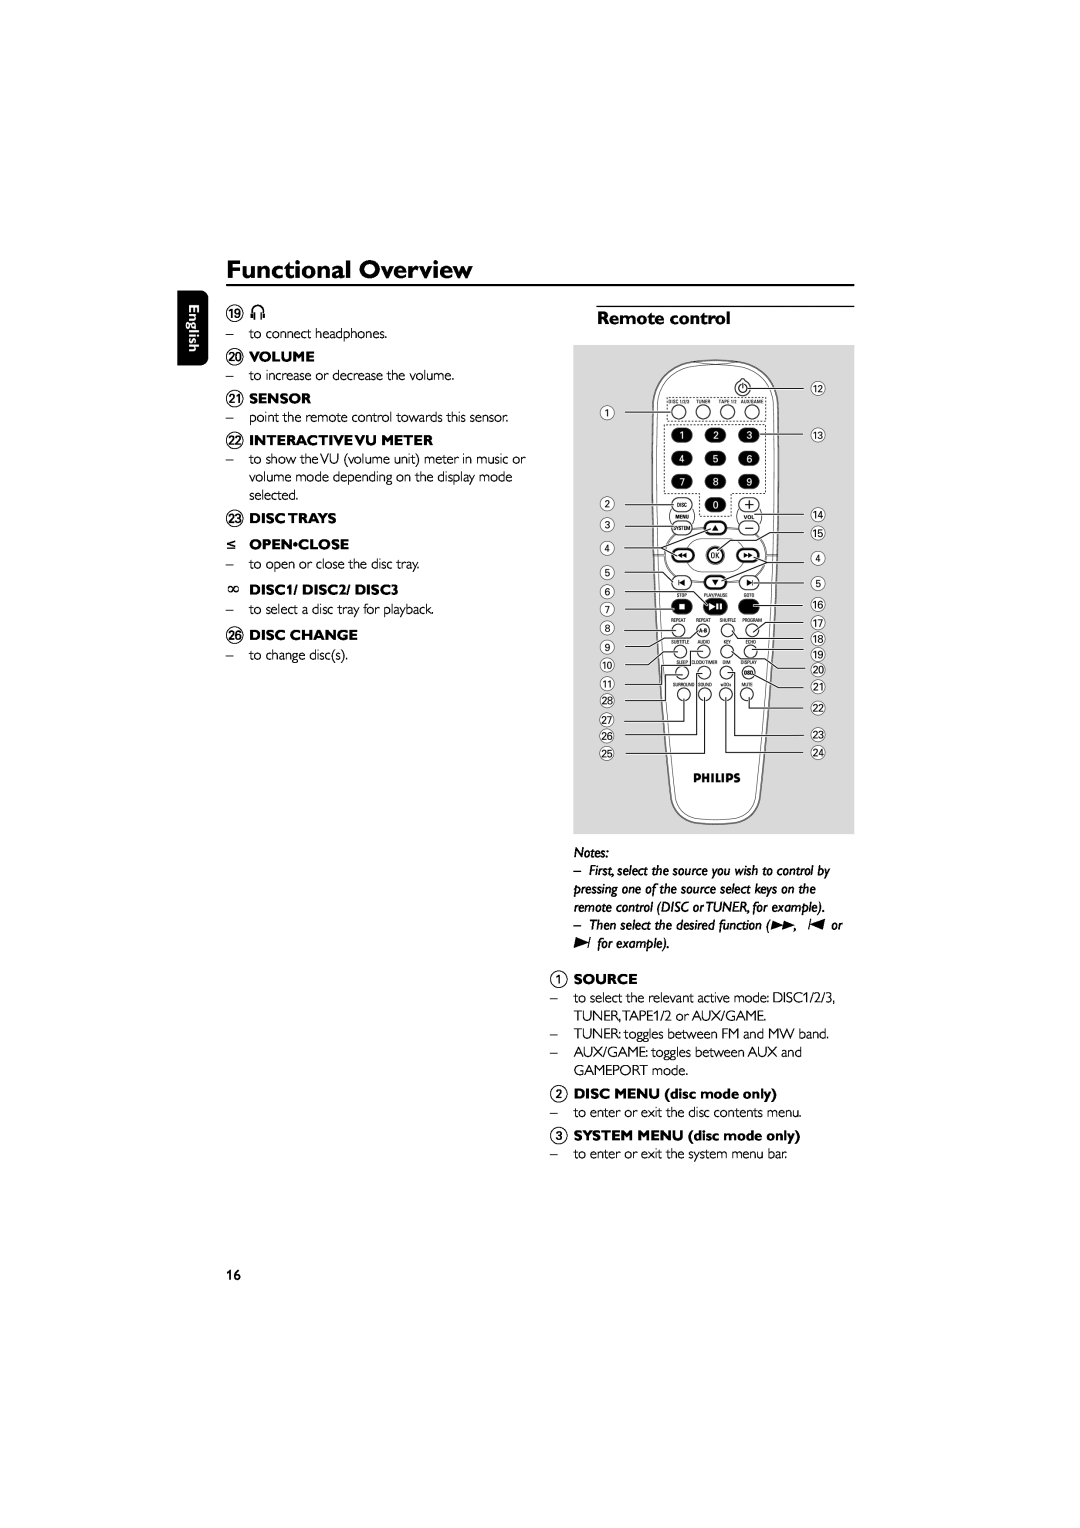 Philips FWD796/21 Functional Overview, English, Volume, ¡Sensor, Interactive Vu Meter, £Disc Trays ≤Open Close, 1SOURCE 